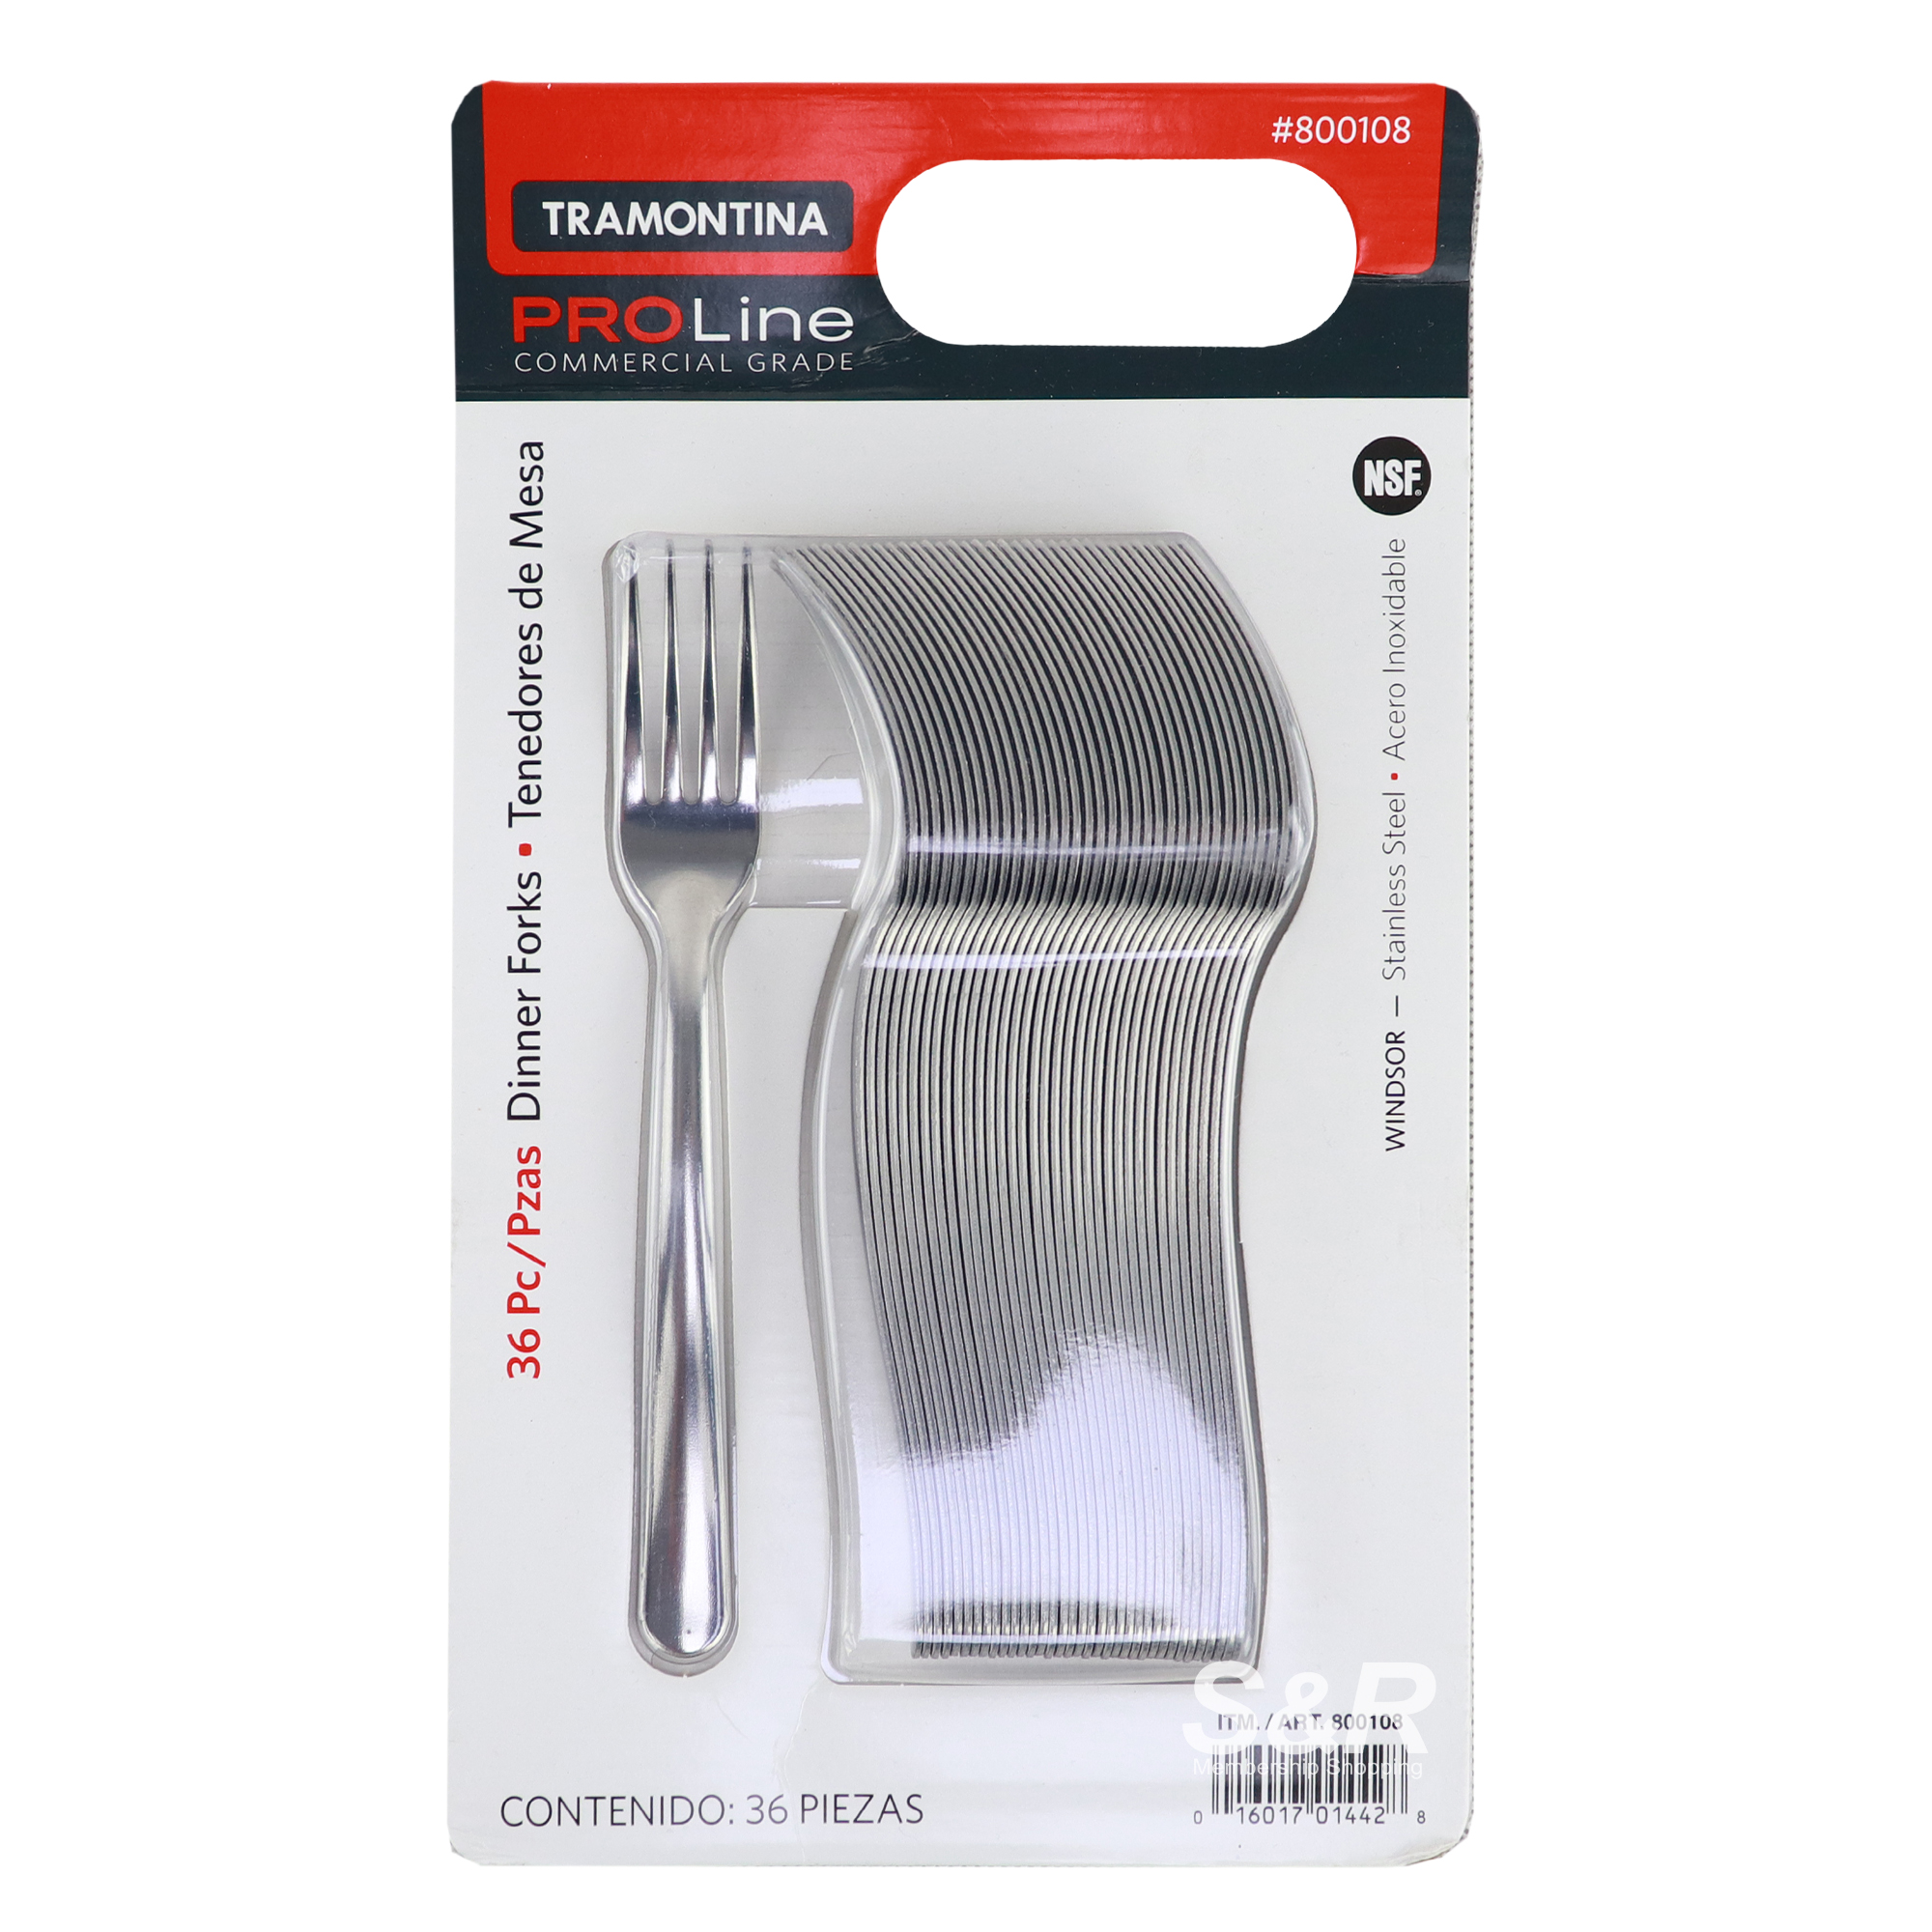 Tramontina ProLine Commercial Grade Dinner Forks 36pcs